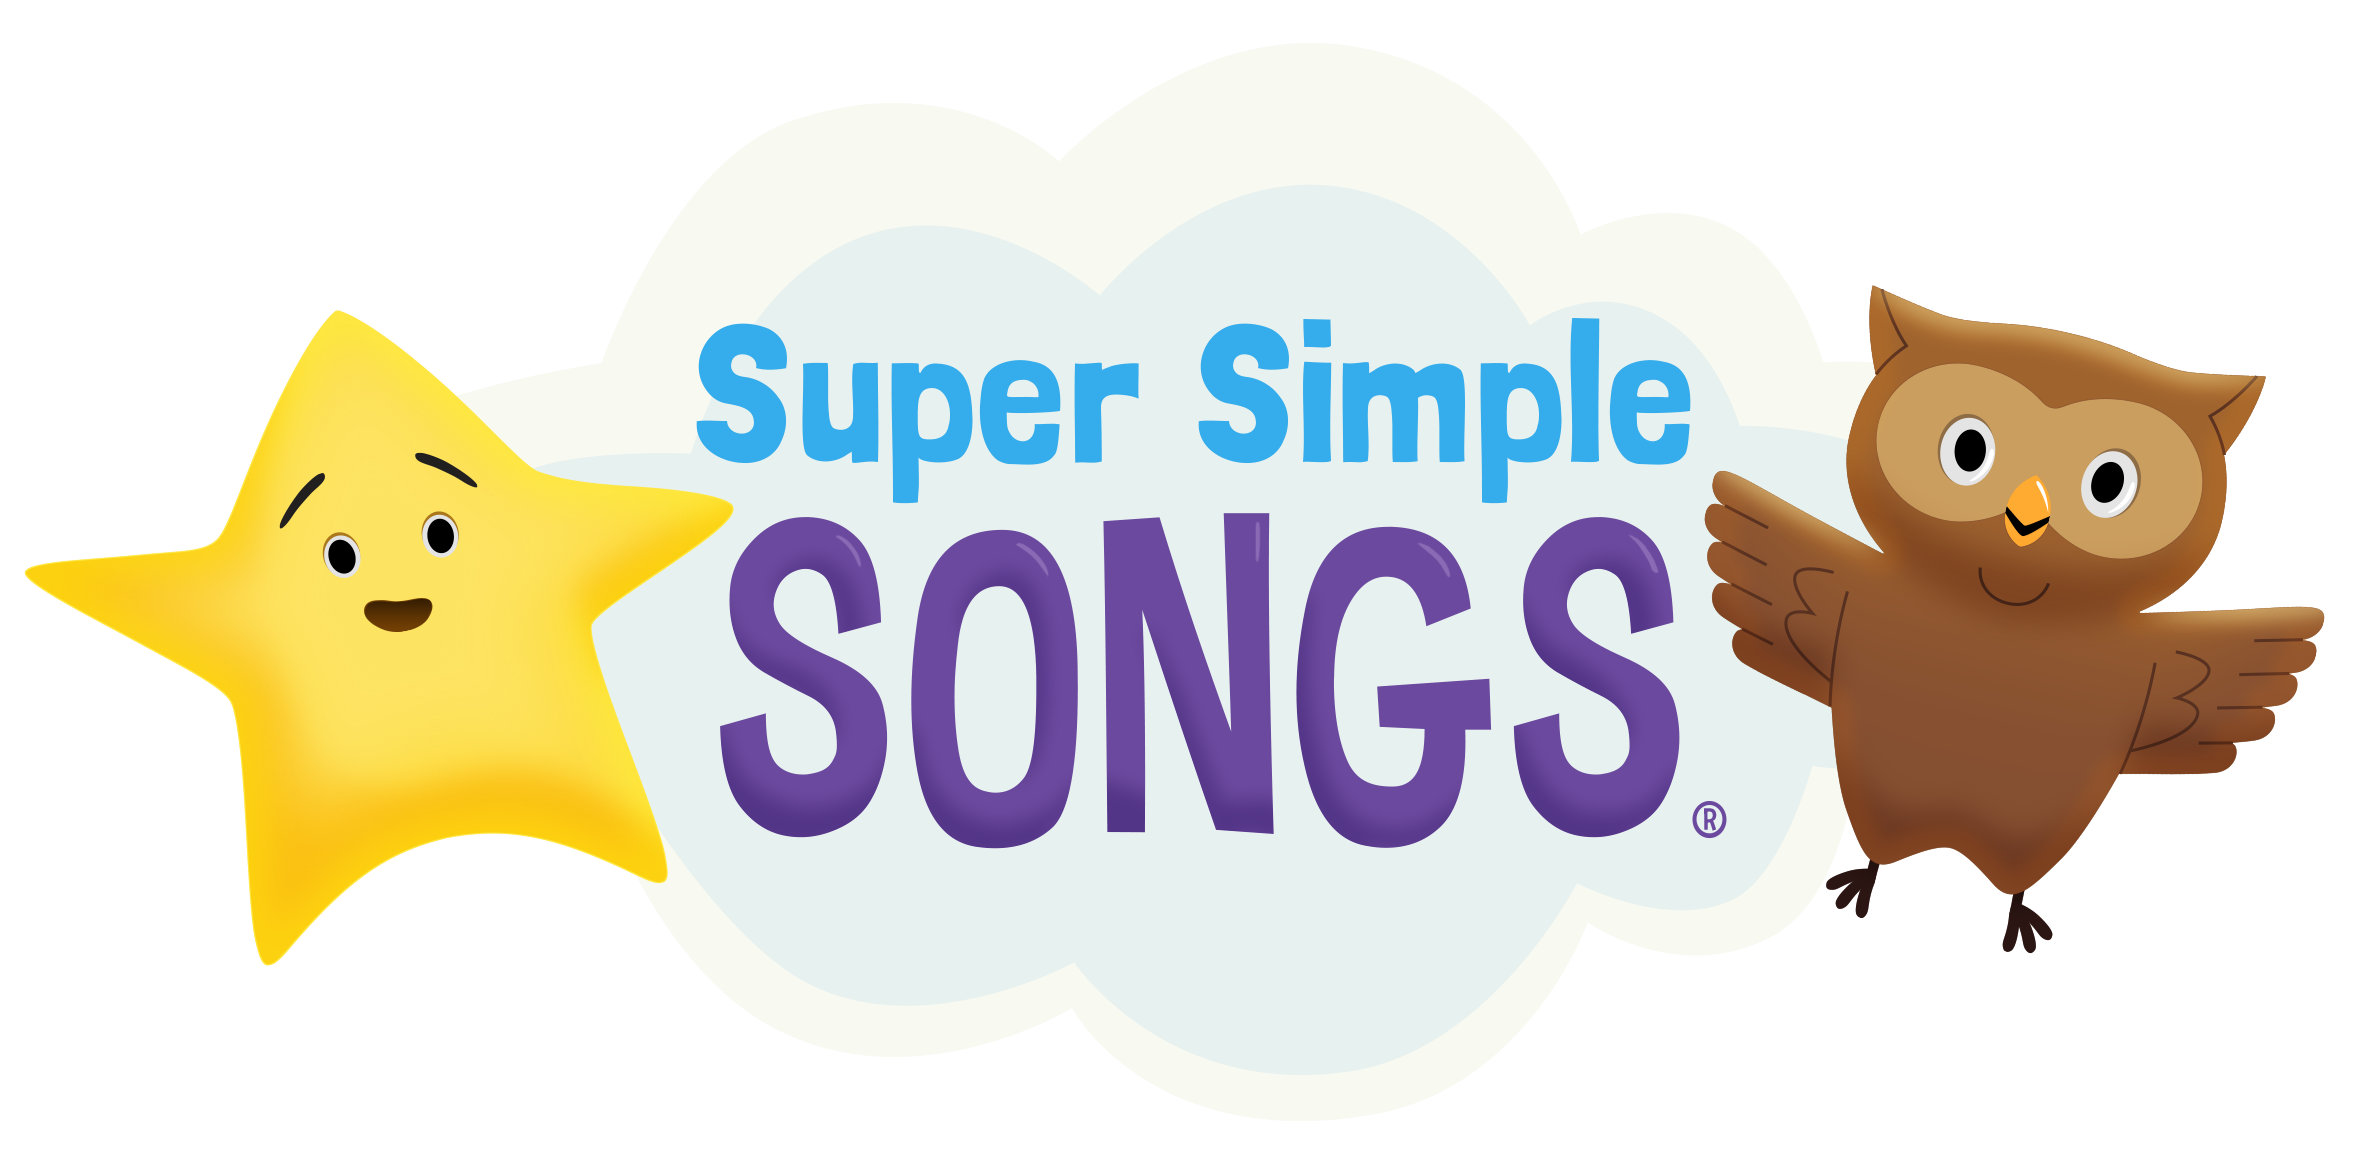 Супер Симпл Сонгс Инглиш. Super simple Songs. Логотип супер Симпл Сонгс. Super simple Songs Kids Songs. Simply songs